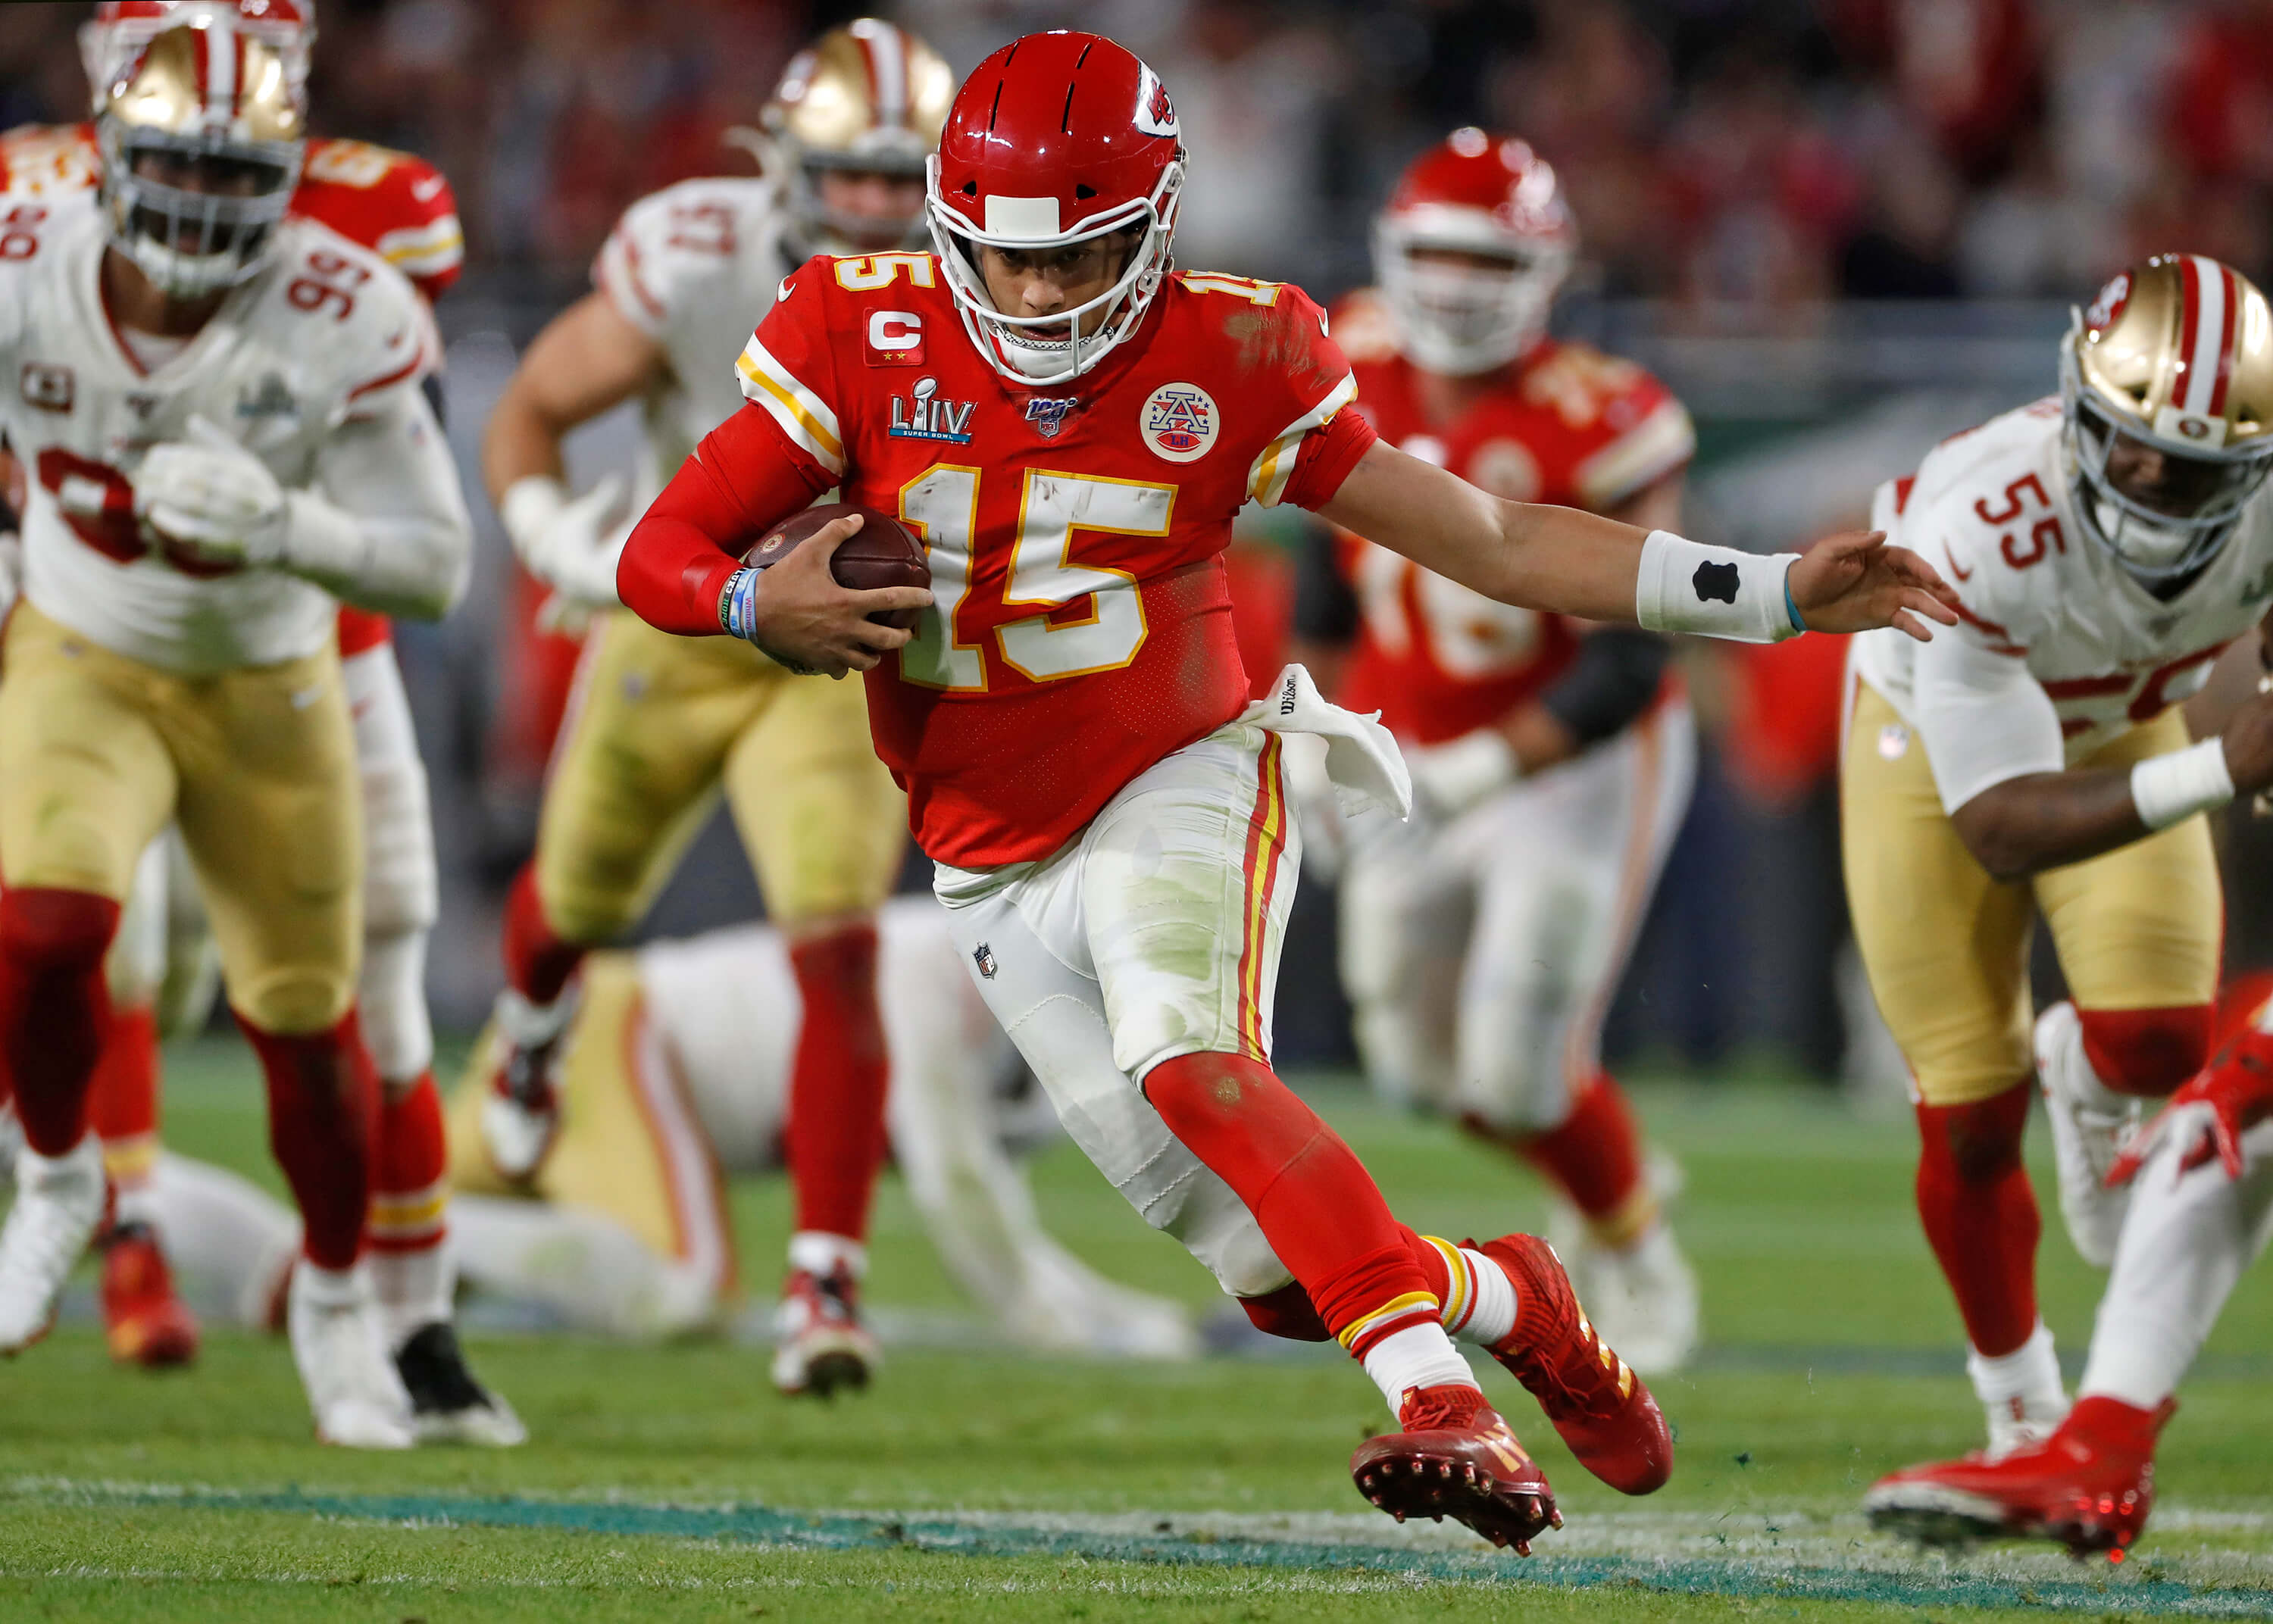 Final Super Bowl Odds, Movement, and More: Kansas City Chiefs vs San Francisco 49ers